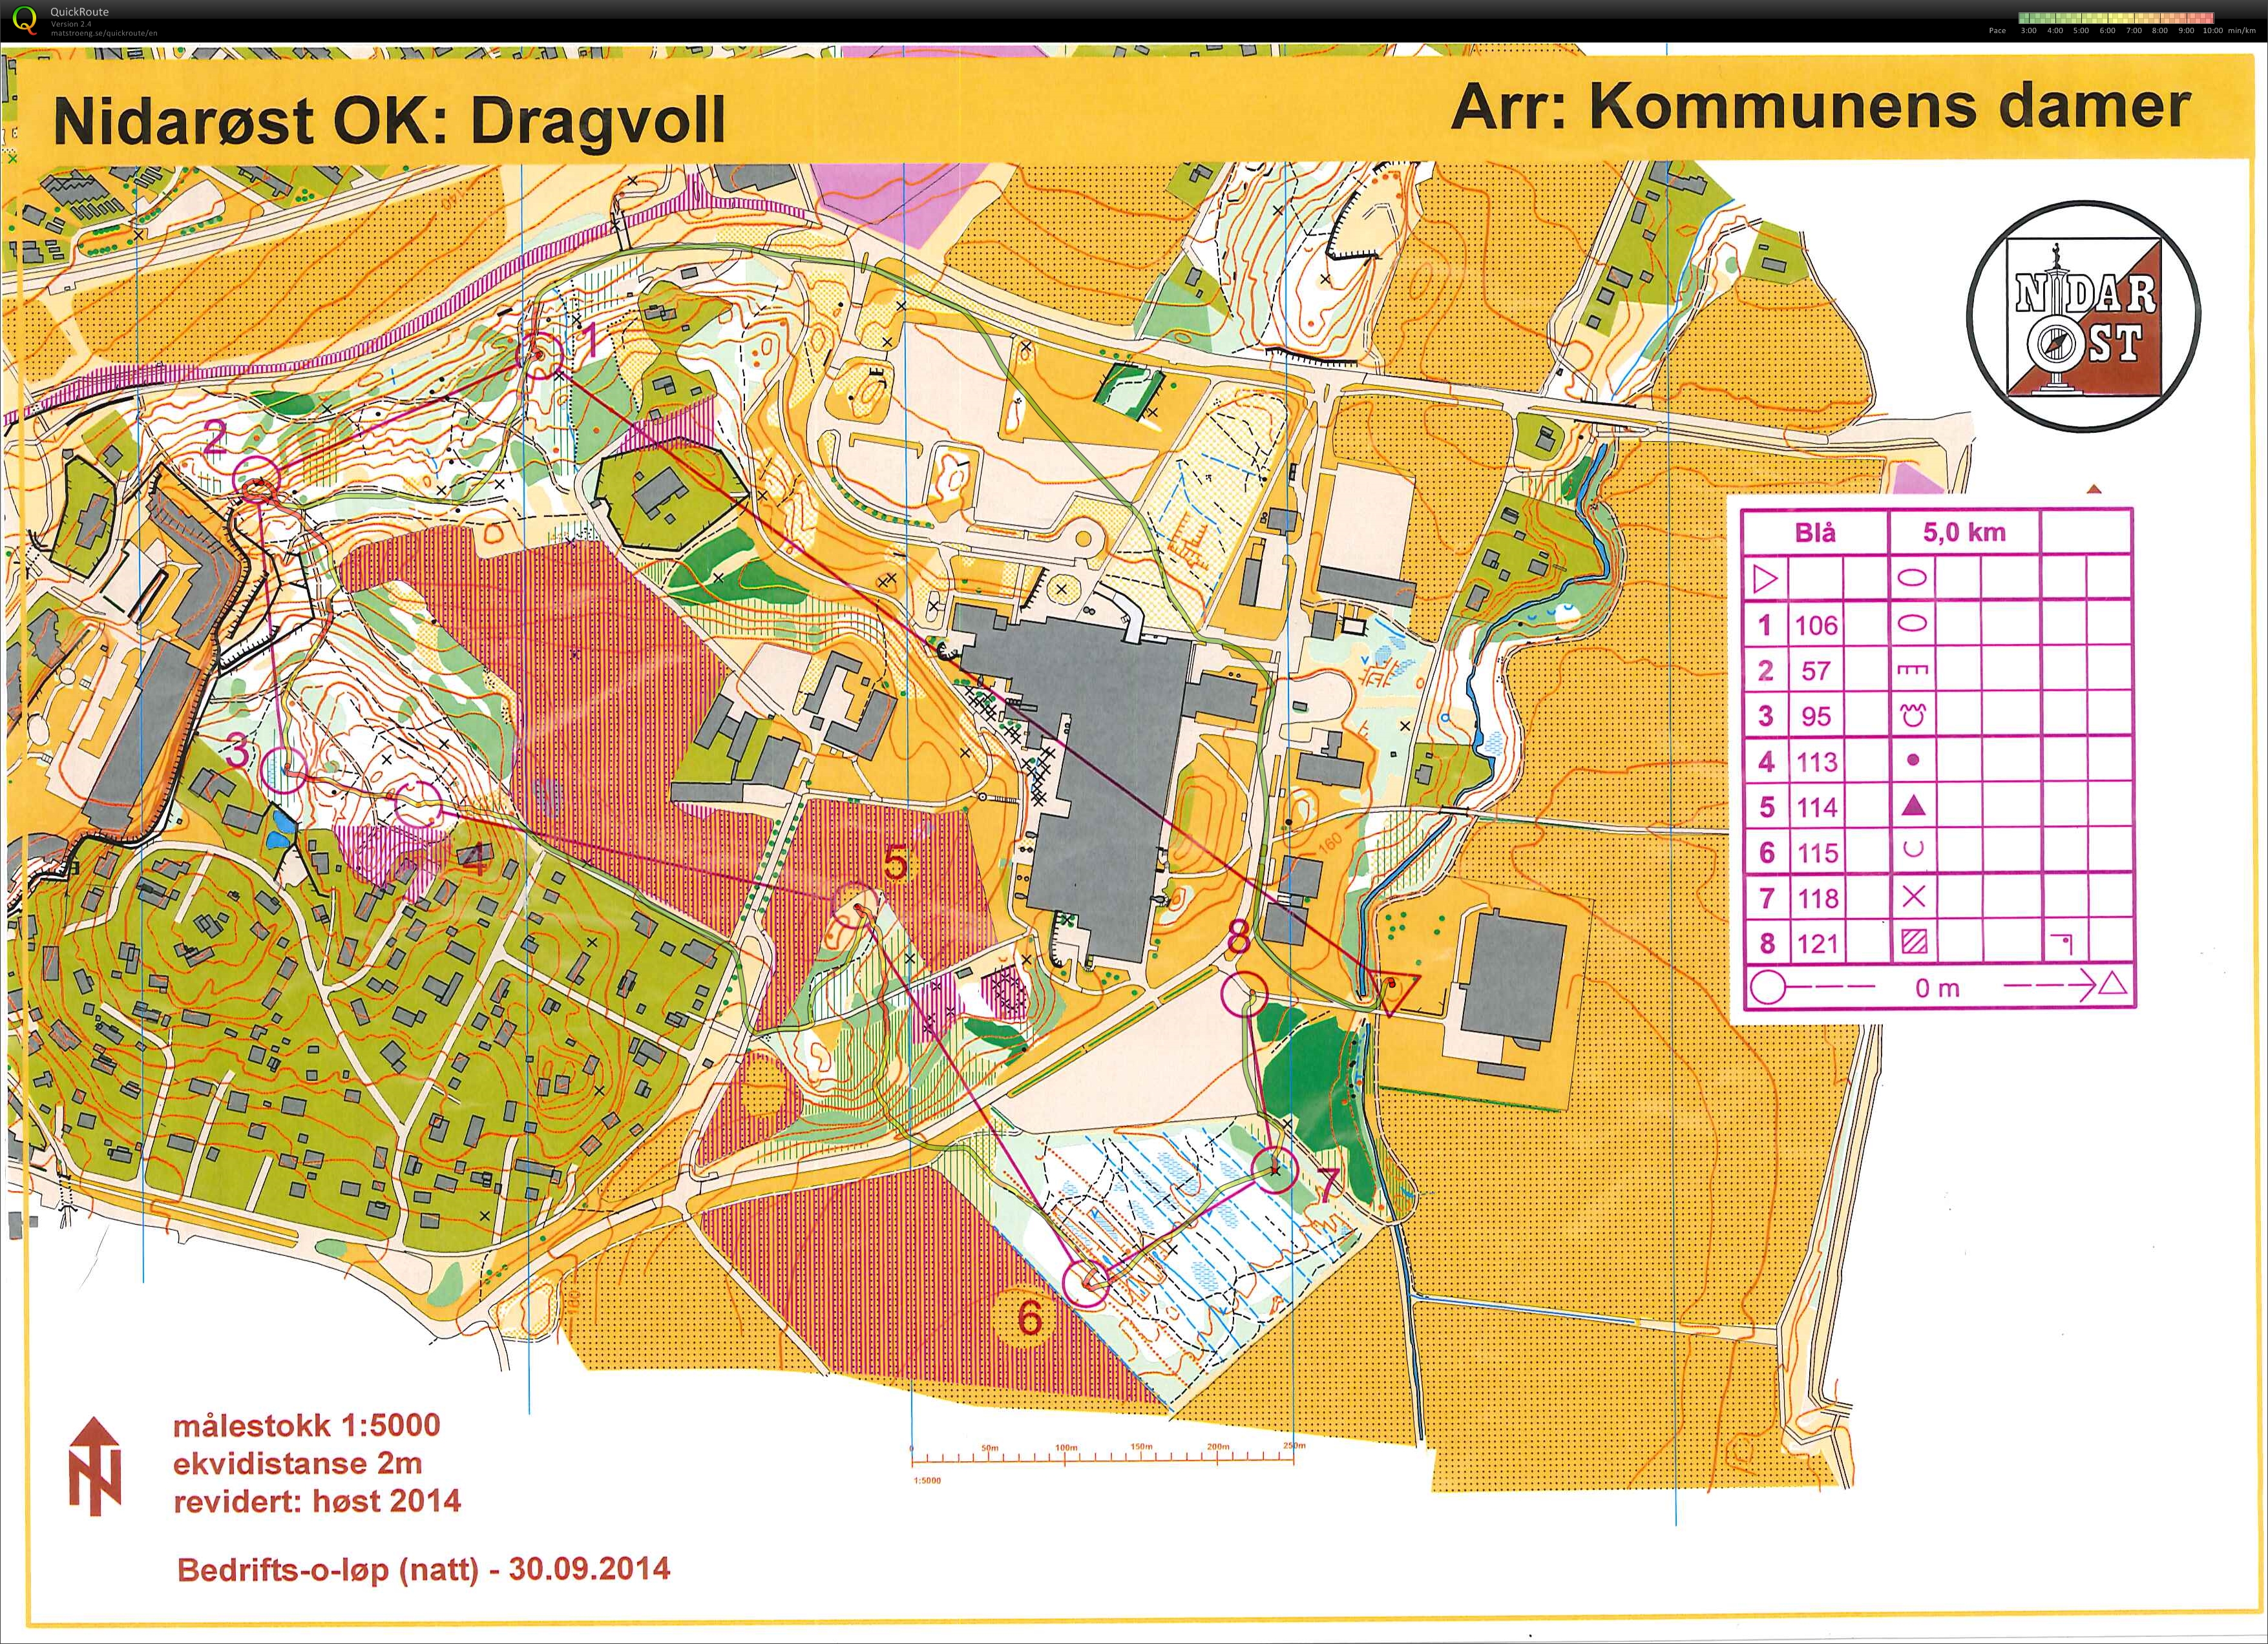 Bedrifts o-løp natt Dragvoll, del 1 (2014-09-30)